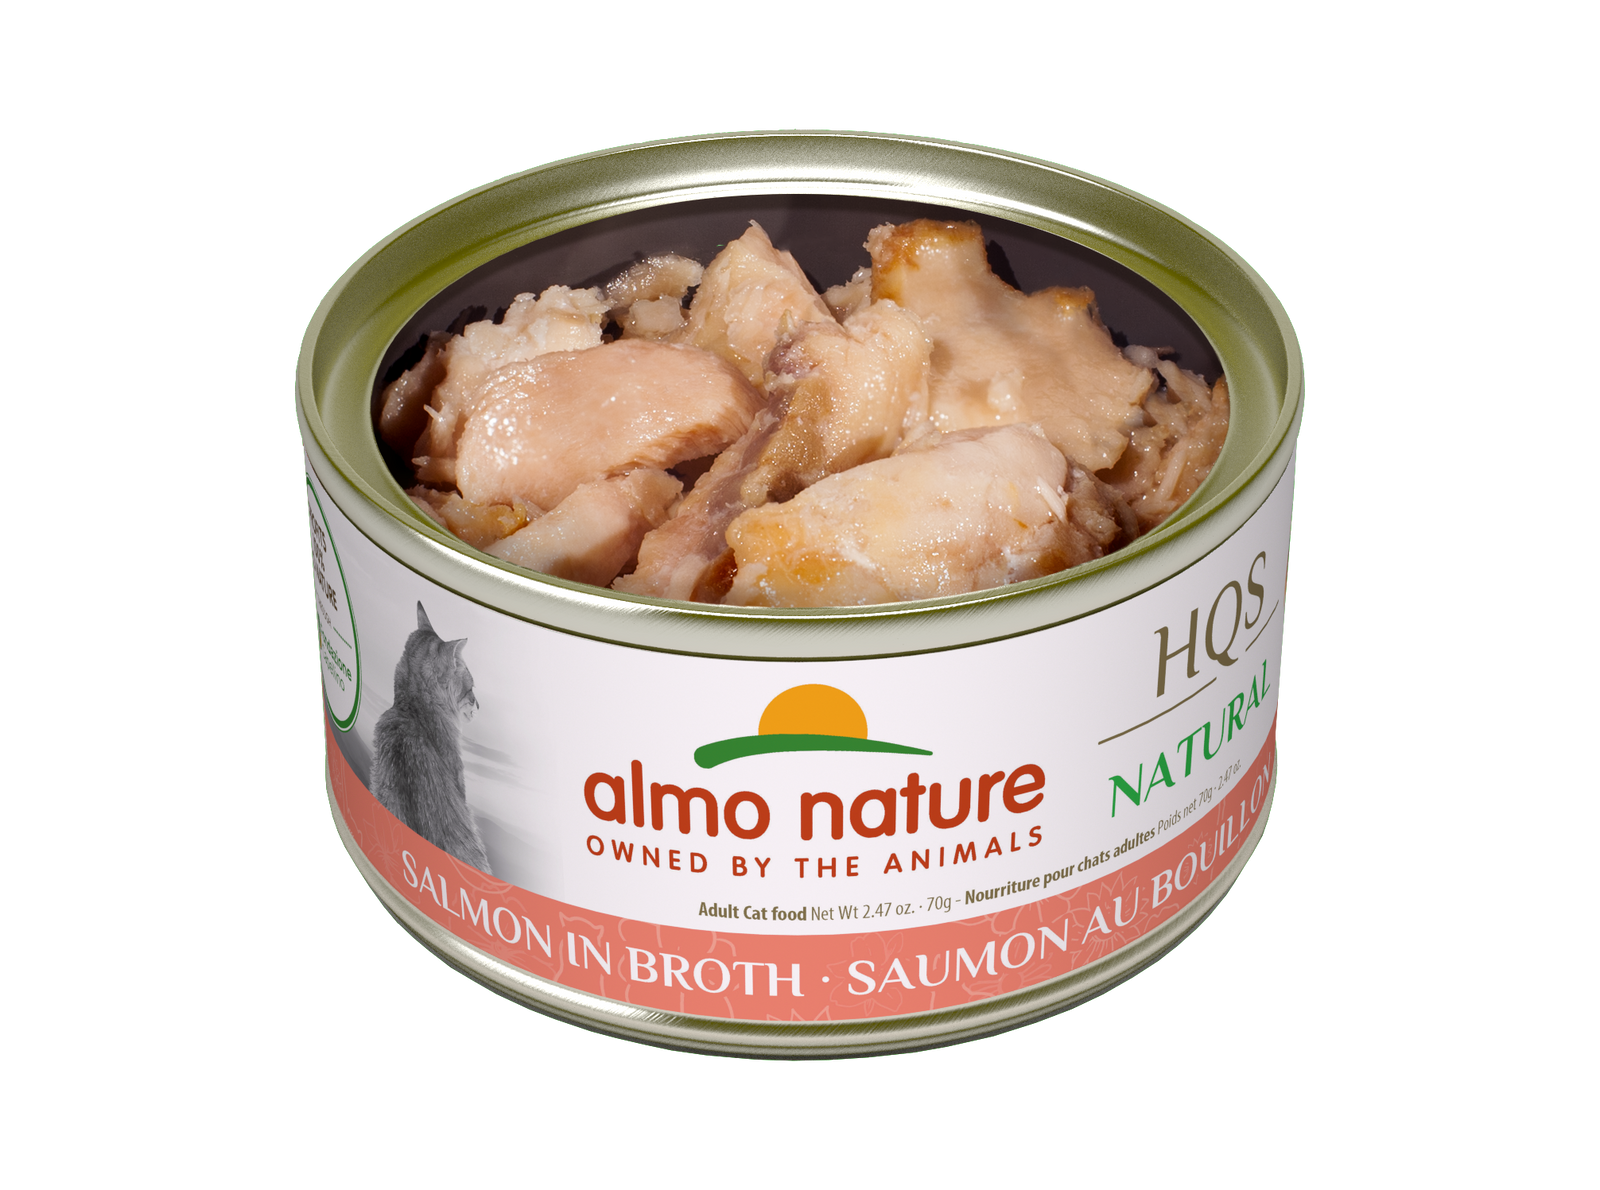 Almo Nature HQS Salmon in Broth